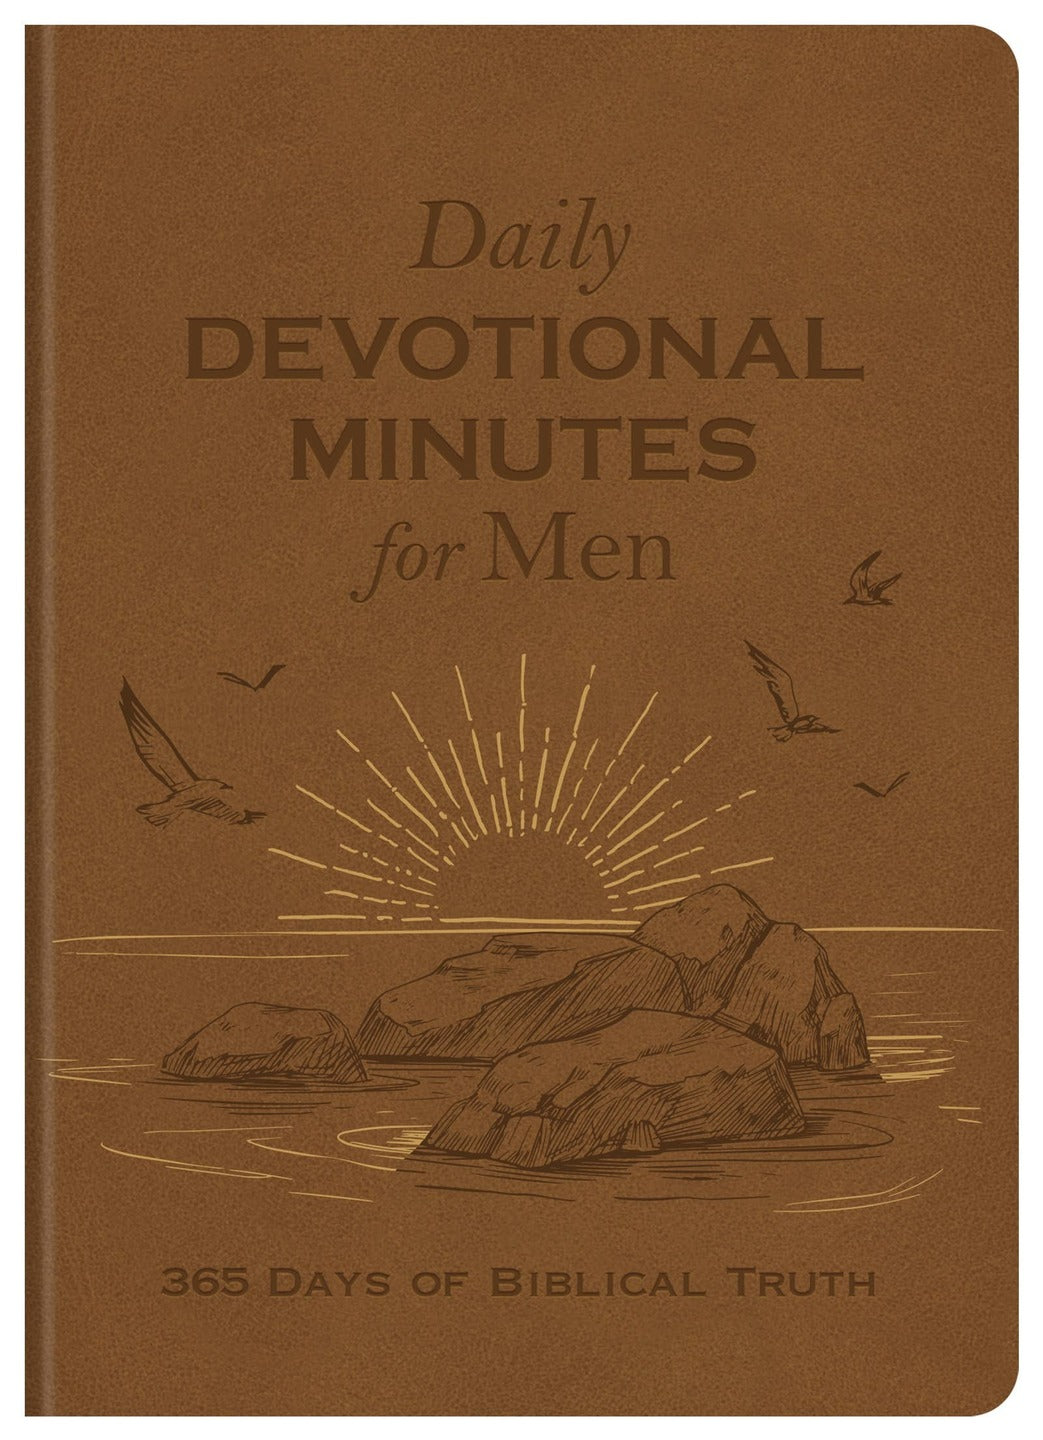 Barbour Publishing, Inc. - Daily Devotional Minutes for Men